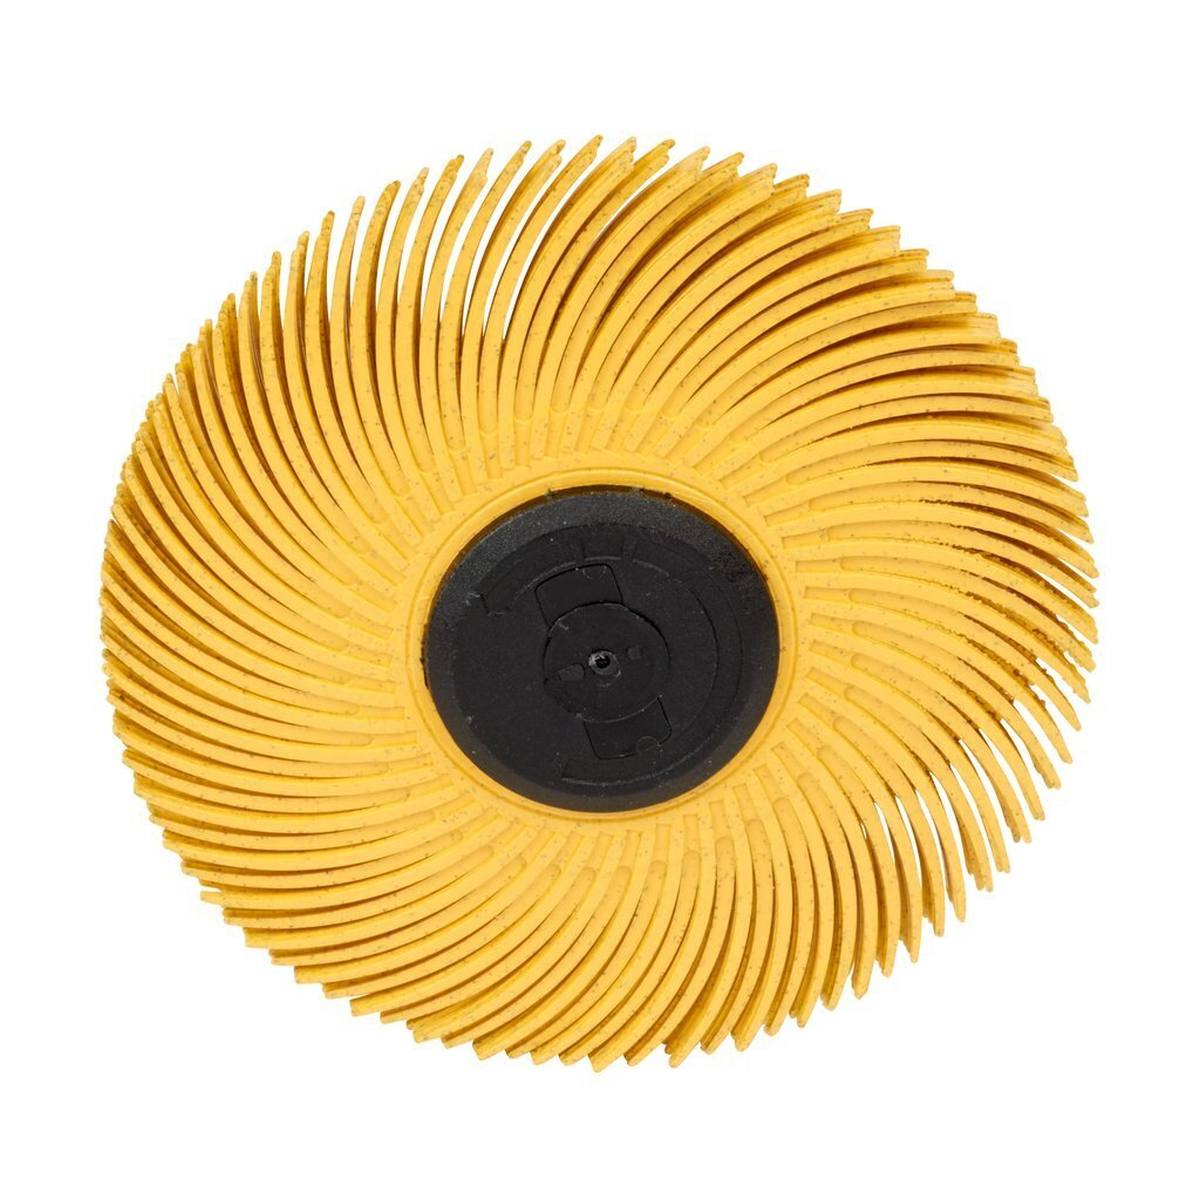 3M Scotch-Brite Radial Bristle Disc BB-ZS avec tige, jaune, 76,2 mm, P80, type C #62968